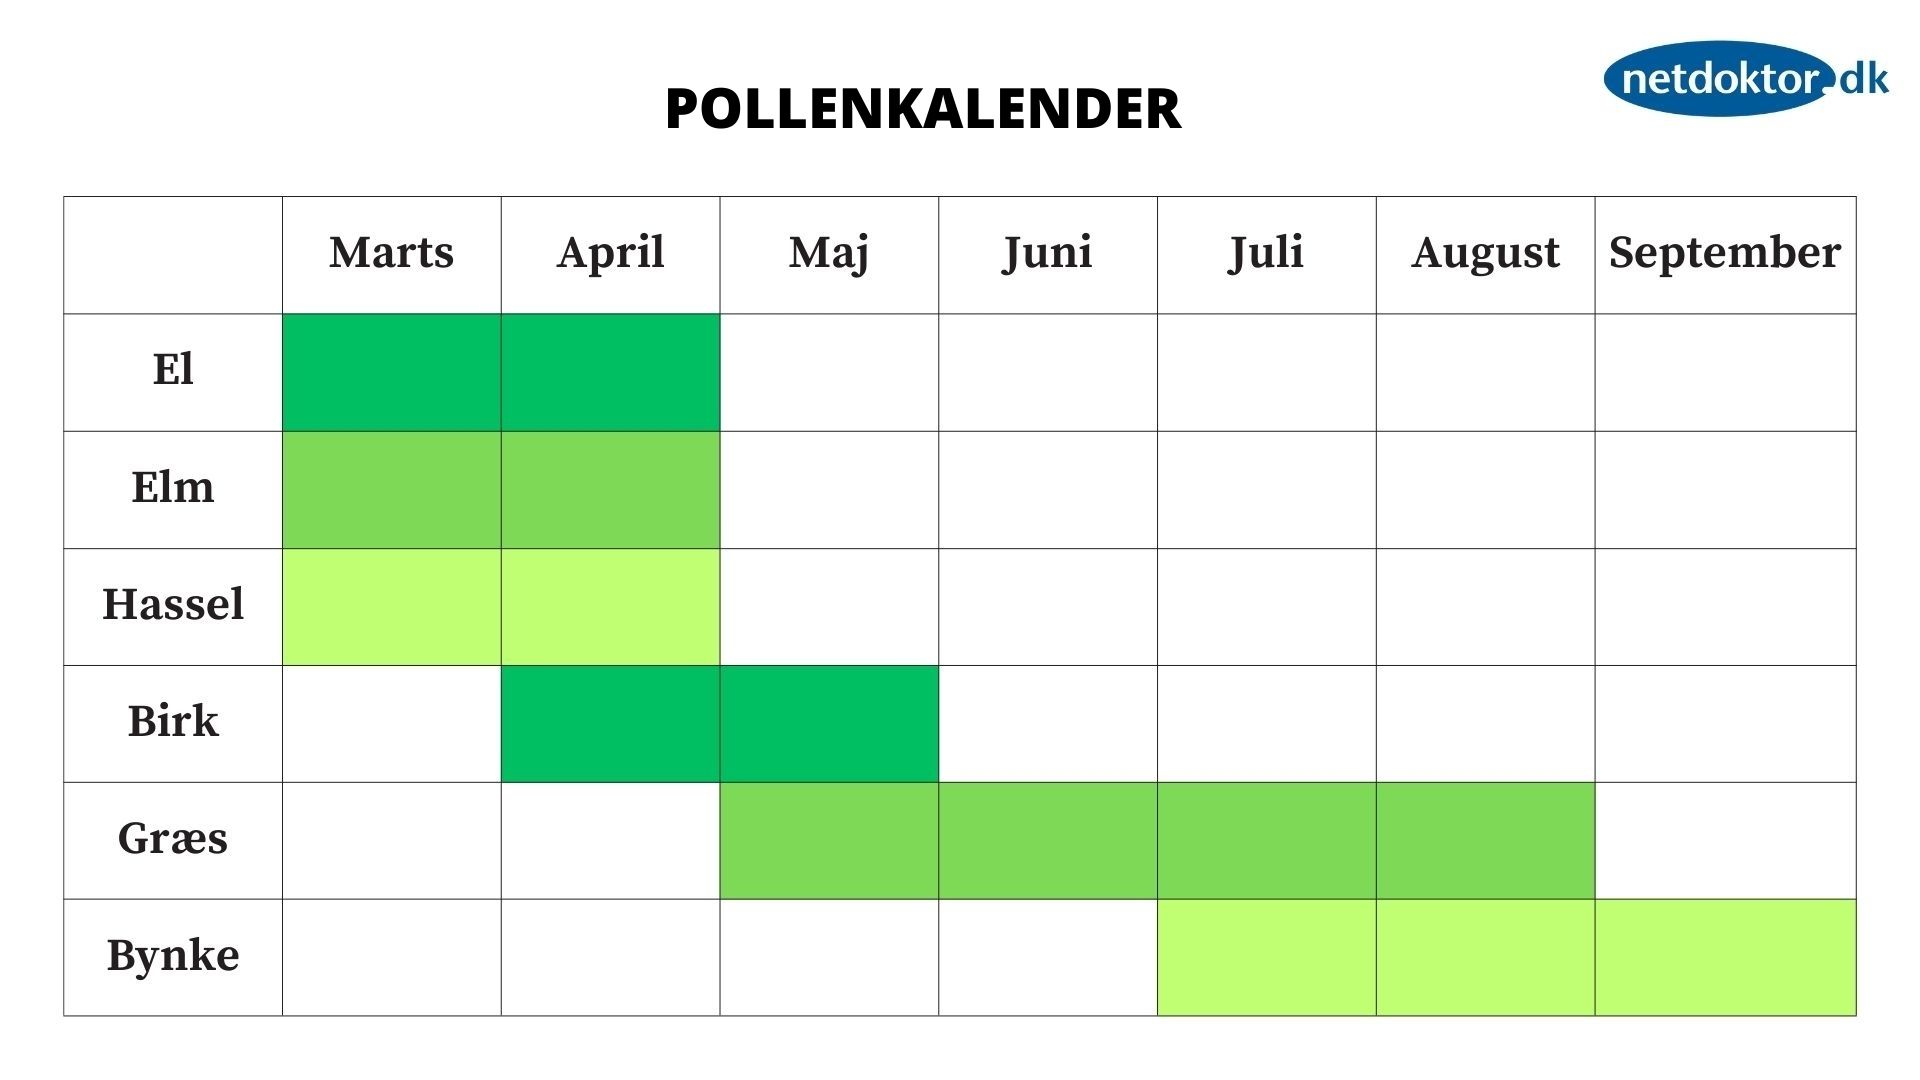 Netdoktors pollen-kalender